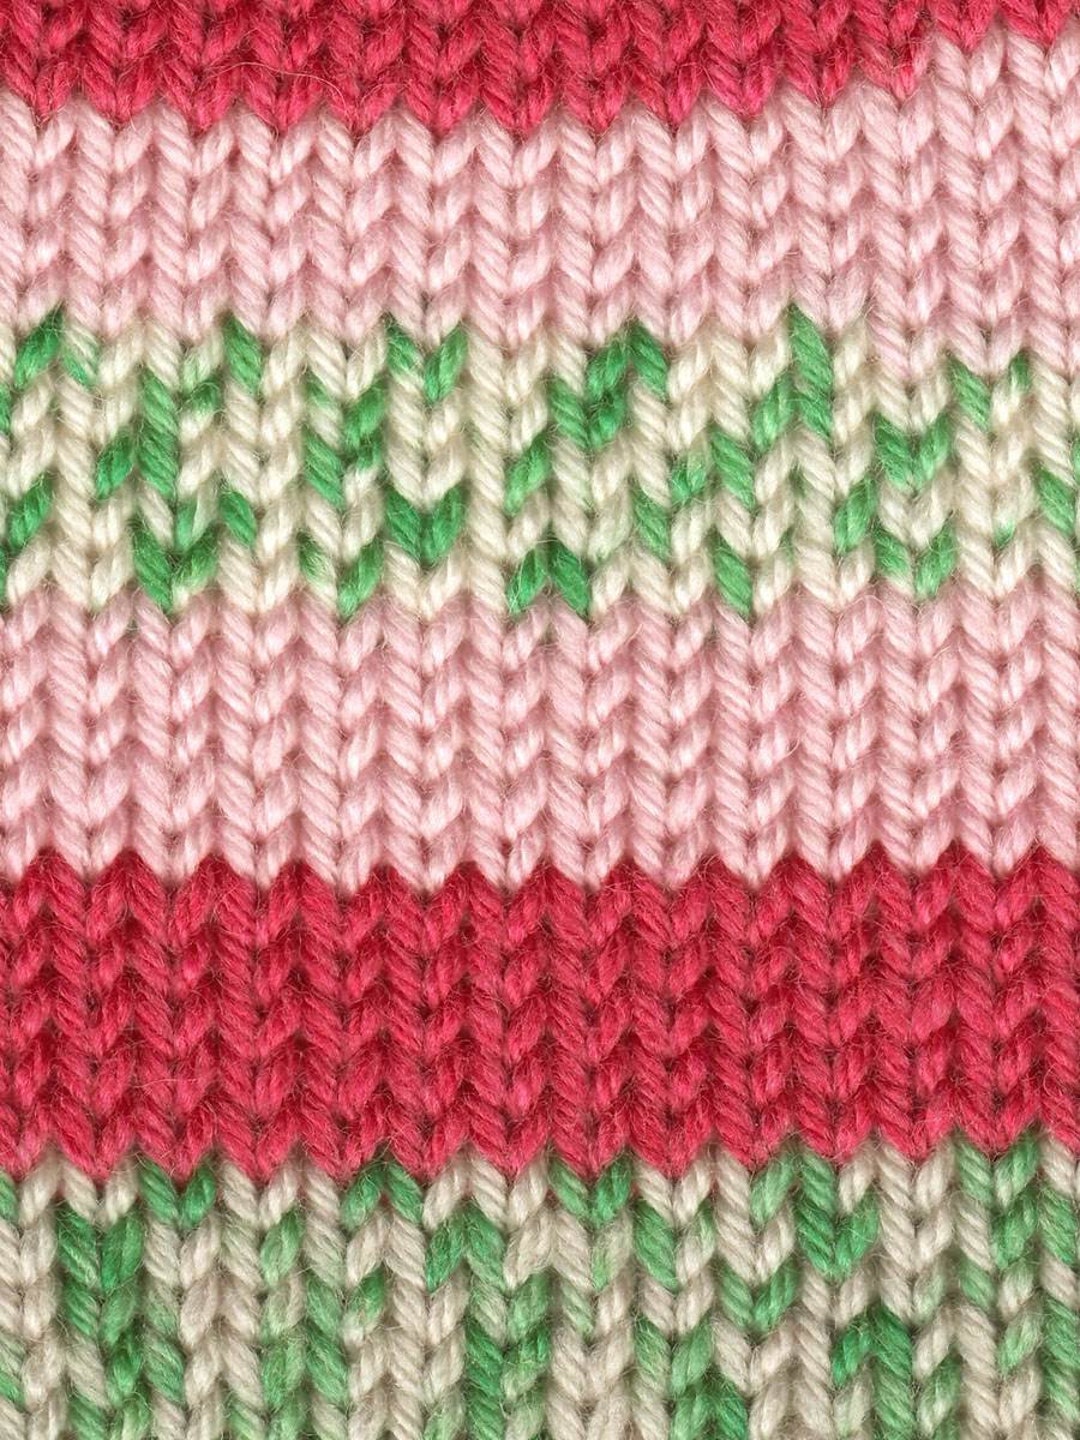 Fair Isle Super Wash Wool Nylon Shades of Rose Pink Light Pink Seafoam  White Yarn Cake 246 Yards Worsted Weight Honeysuckle 23 